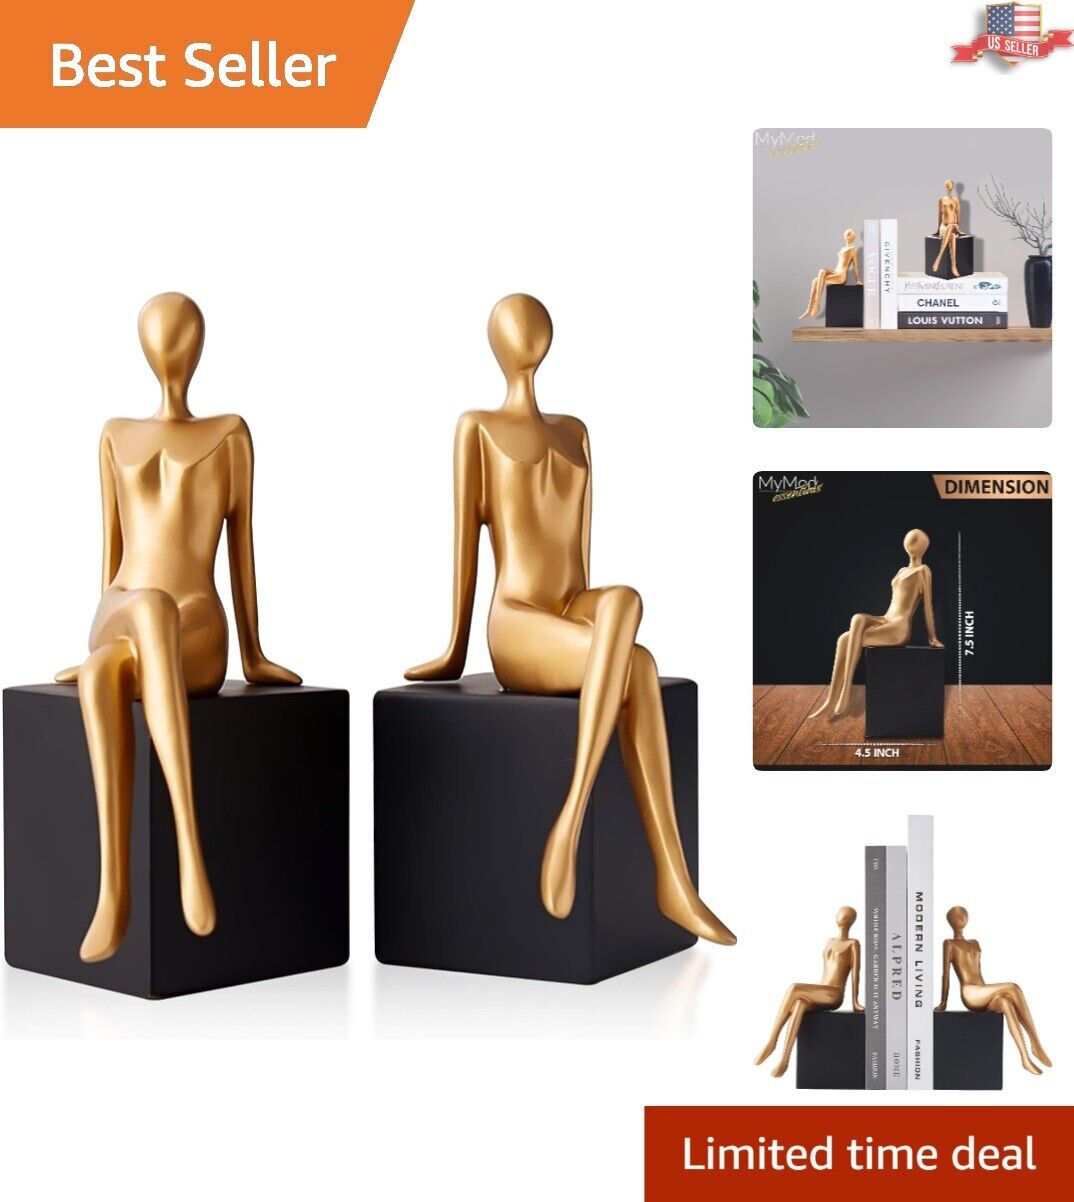 Modern Girl Statues Decorative Bookend Set - Stylish & Versatile - Great Gift